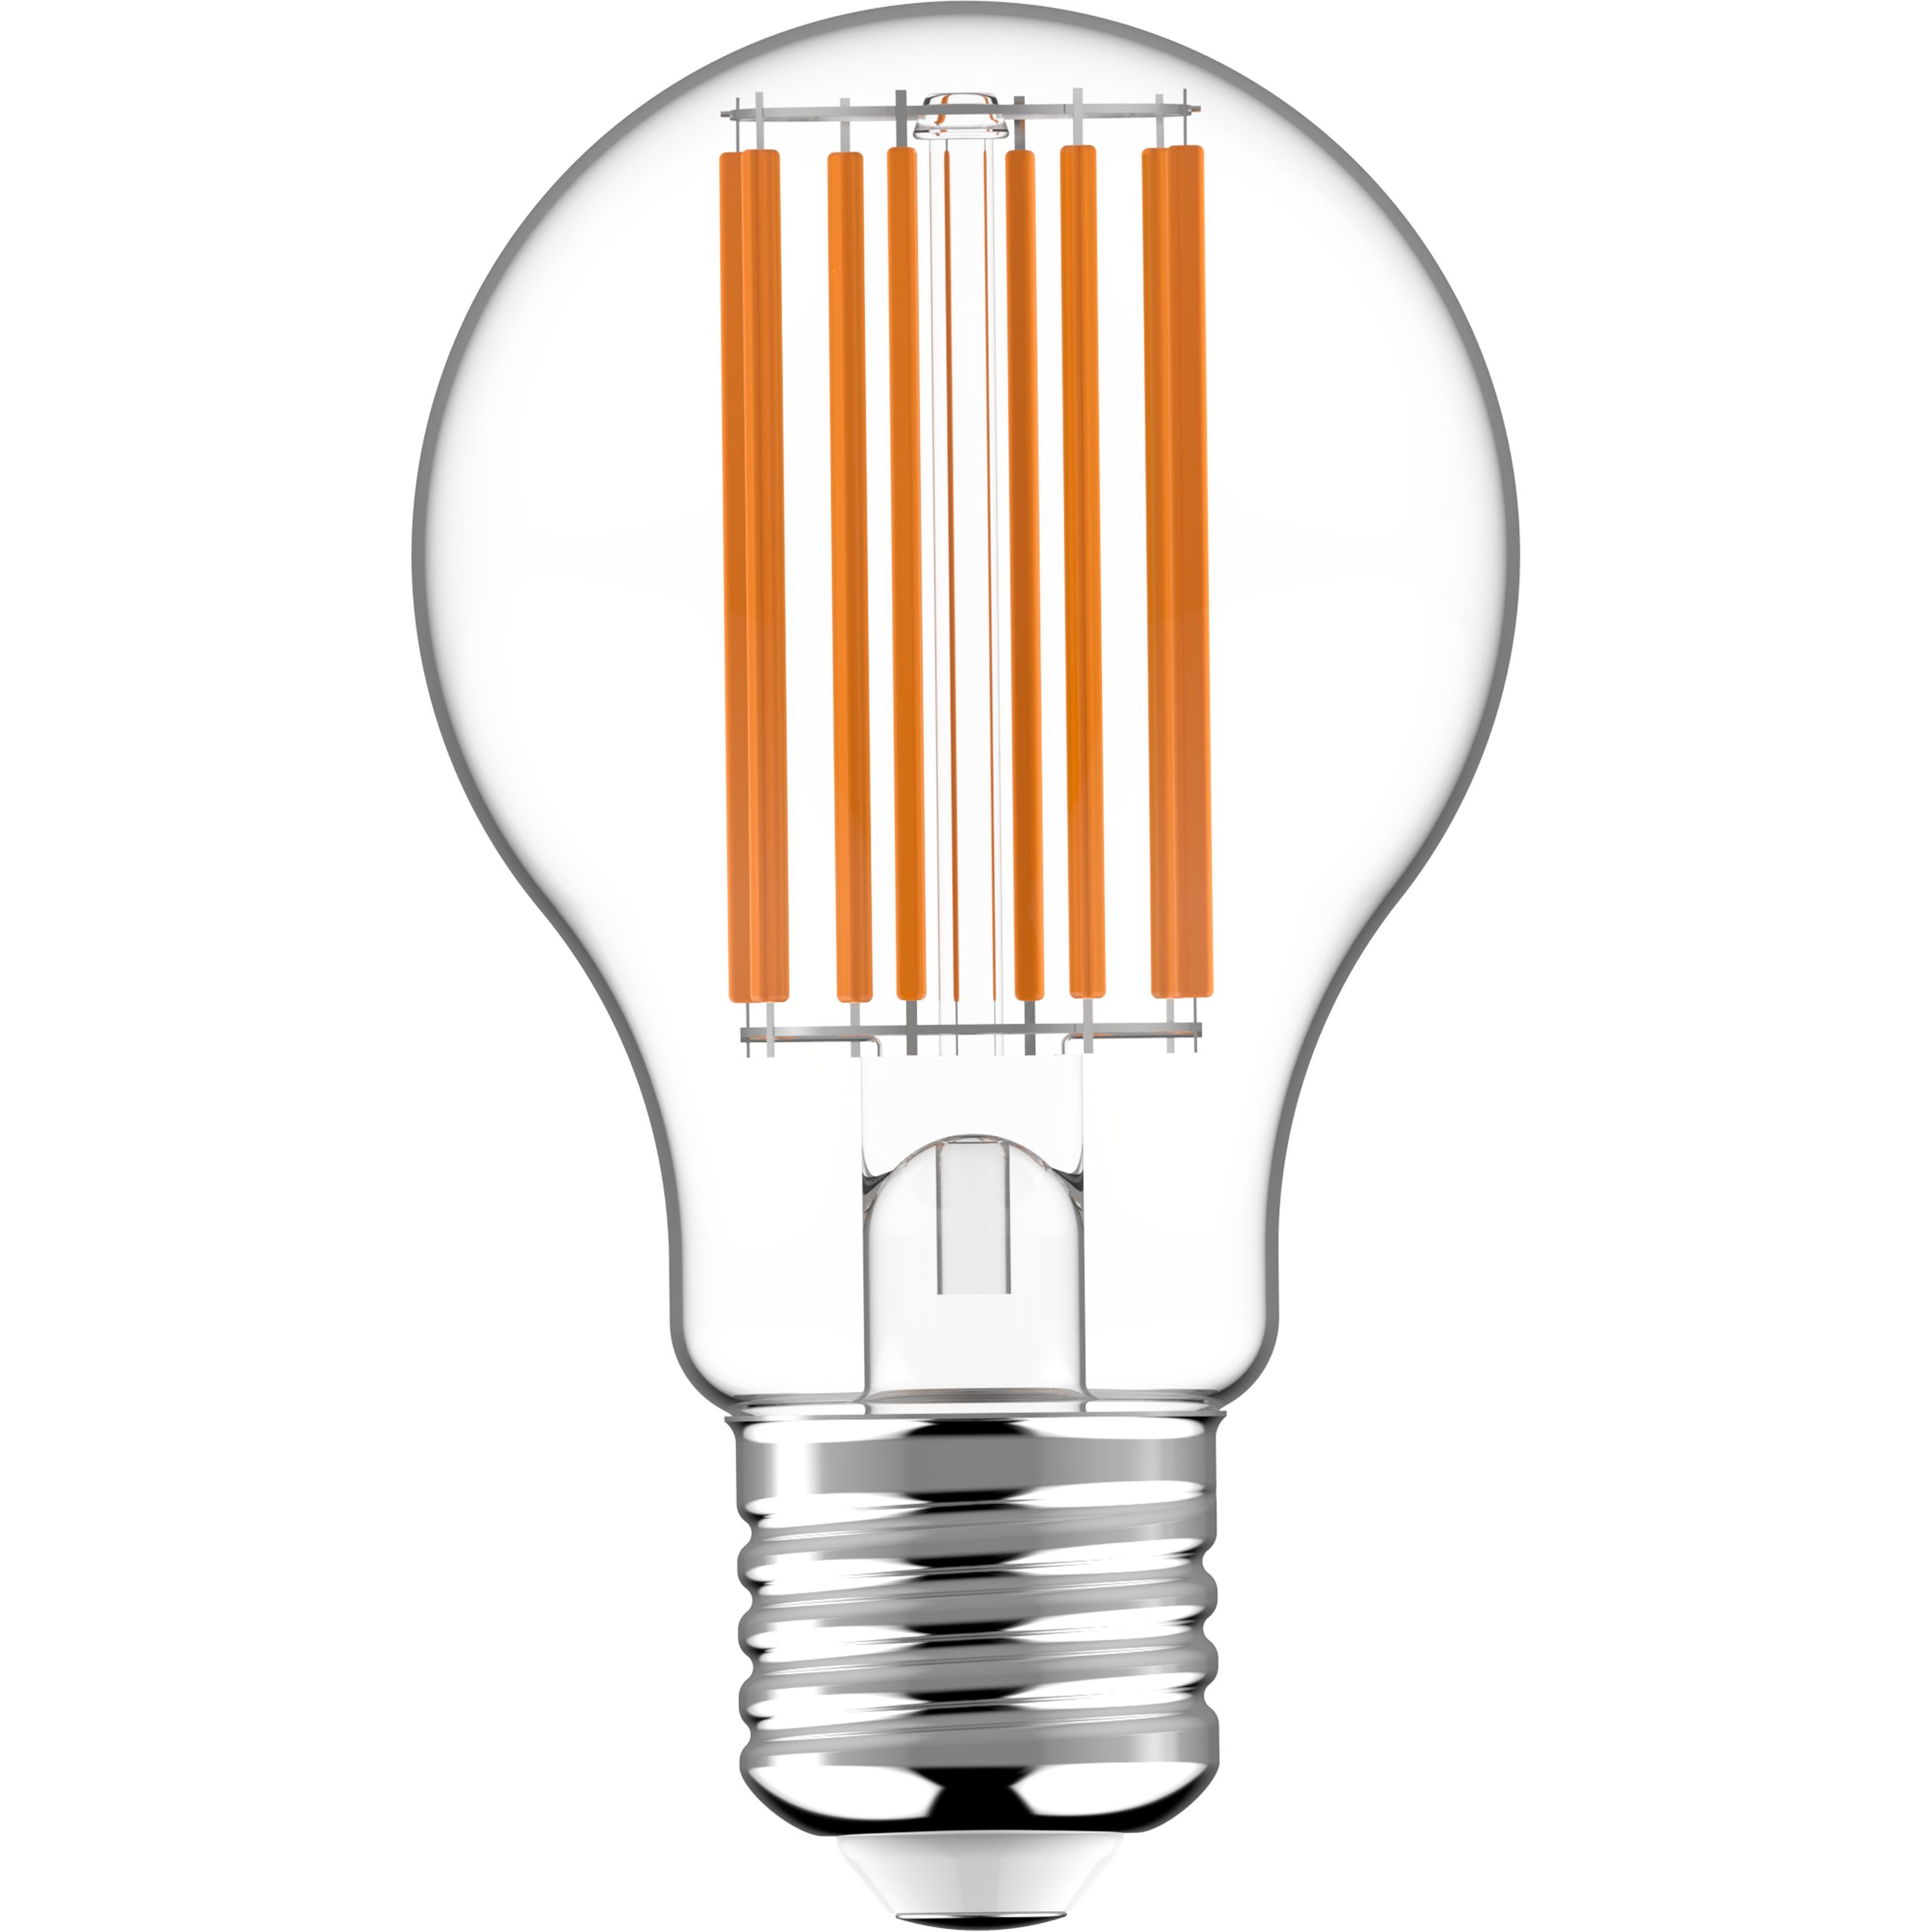 LED's light LED-Leuchtmittel 0620165 LED Birne, E27, E27 3,8W warmweiß Klar A60 - 50.000h Haltbarkeit